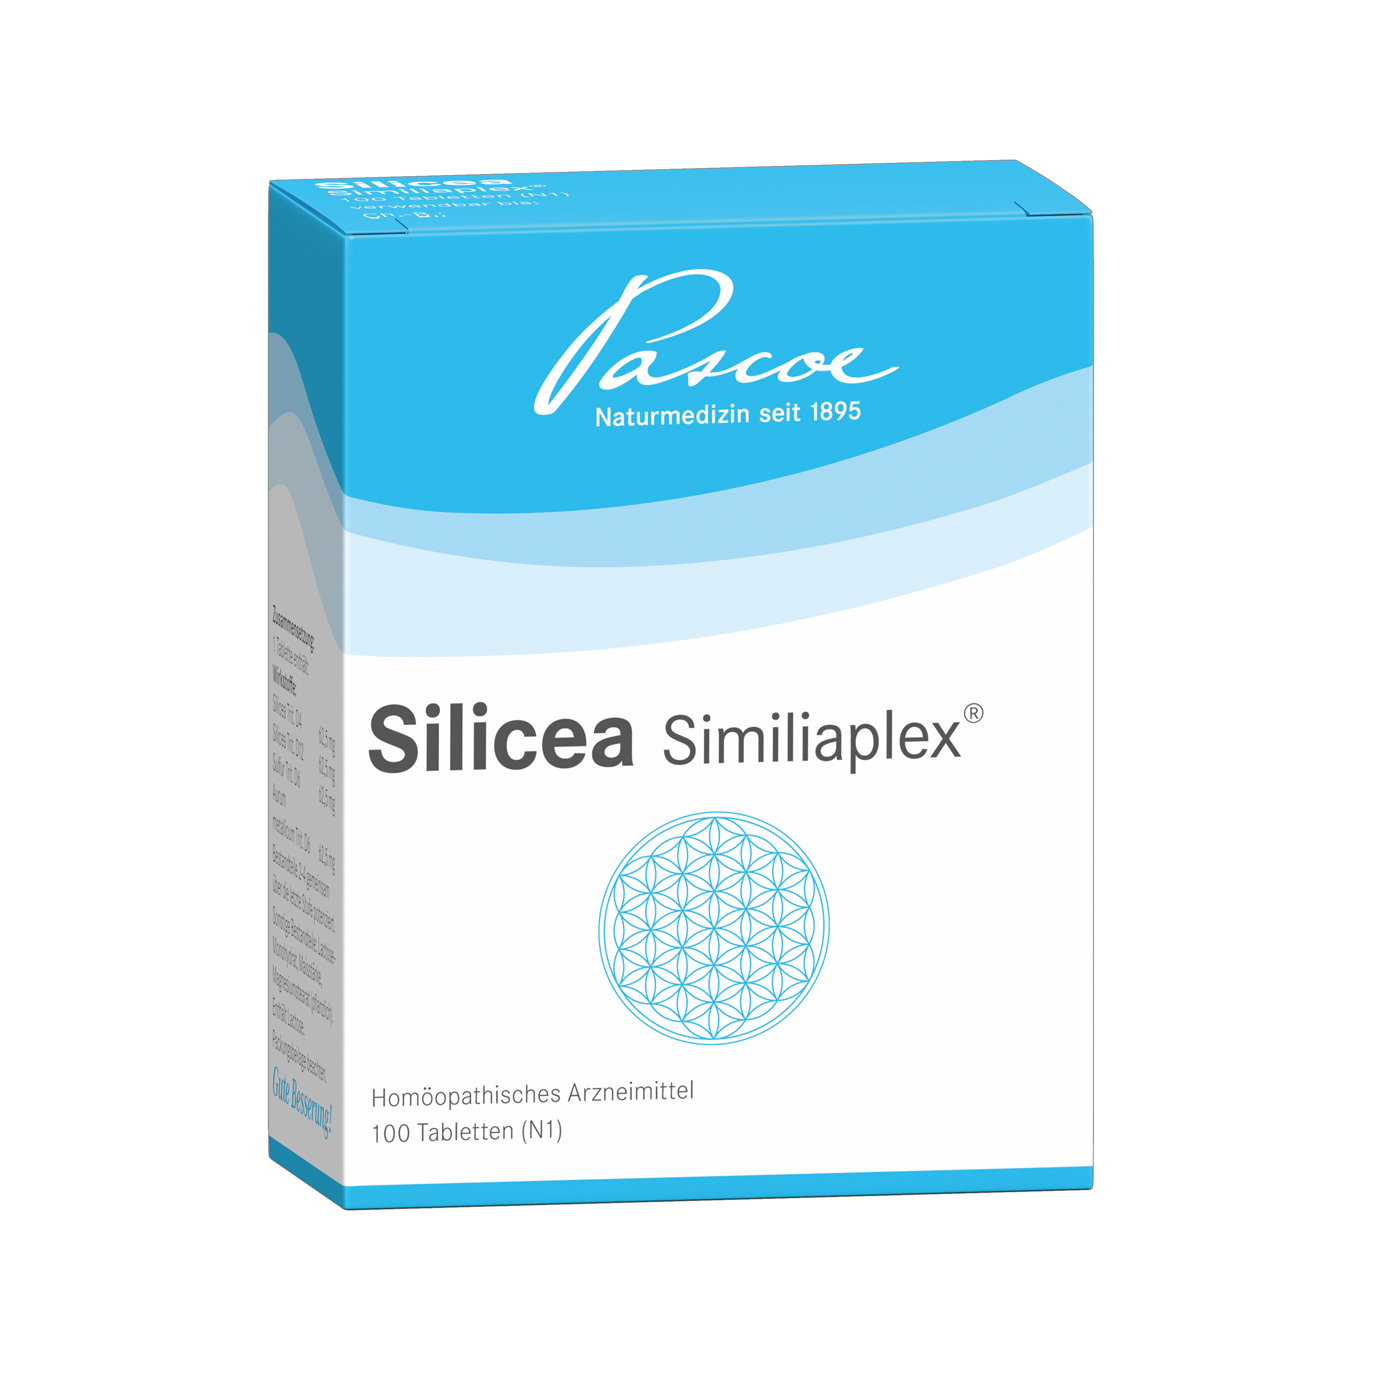 Silicea Similiaplex R 100 Packshot PZN 03840870